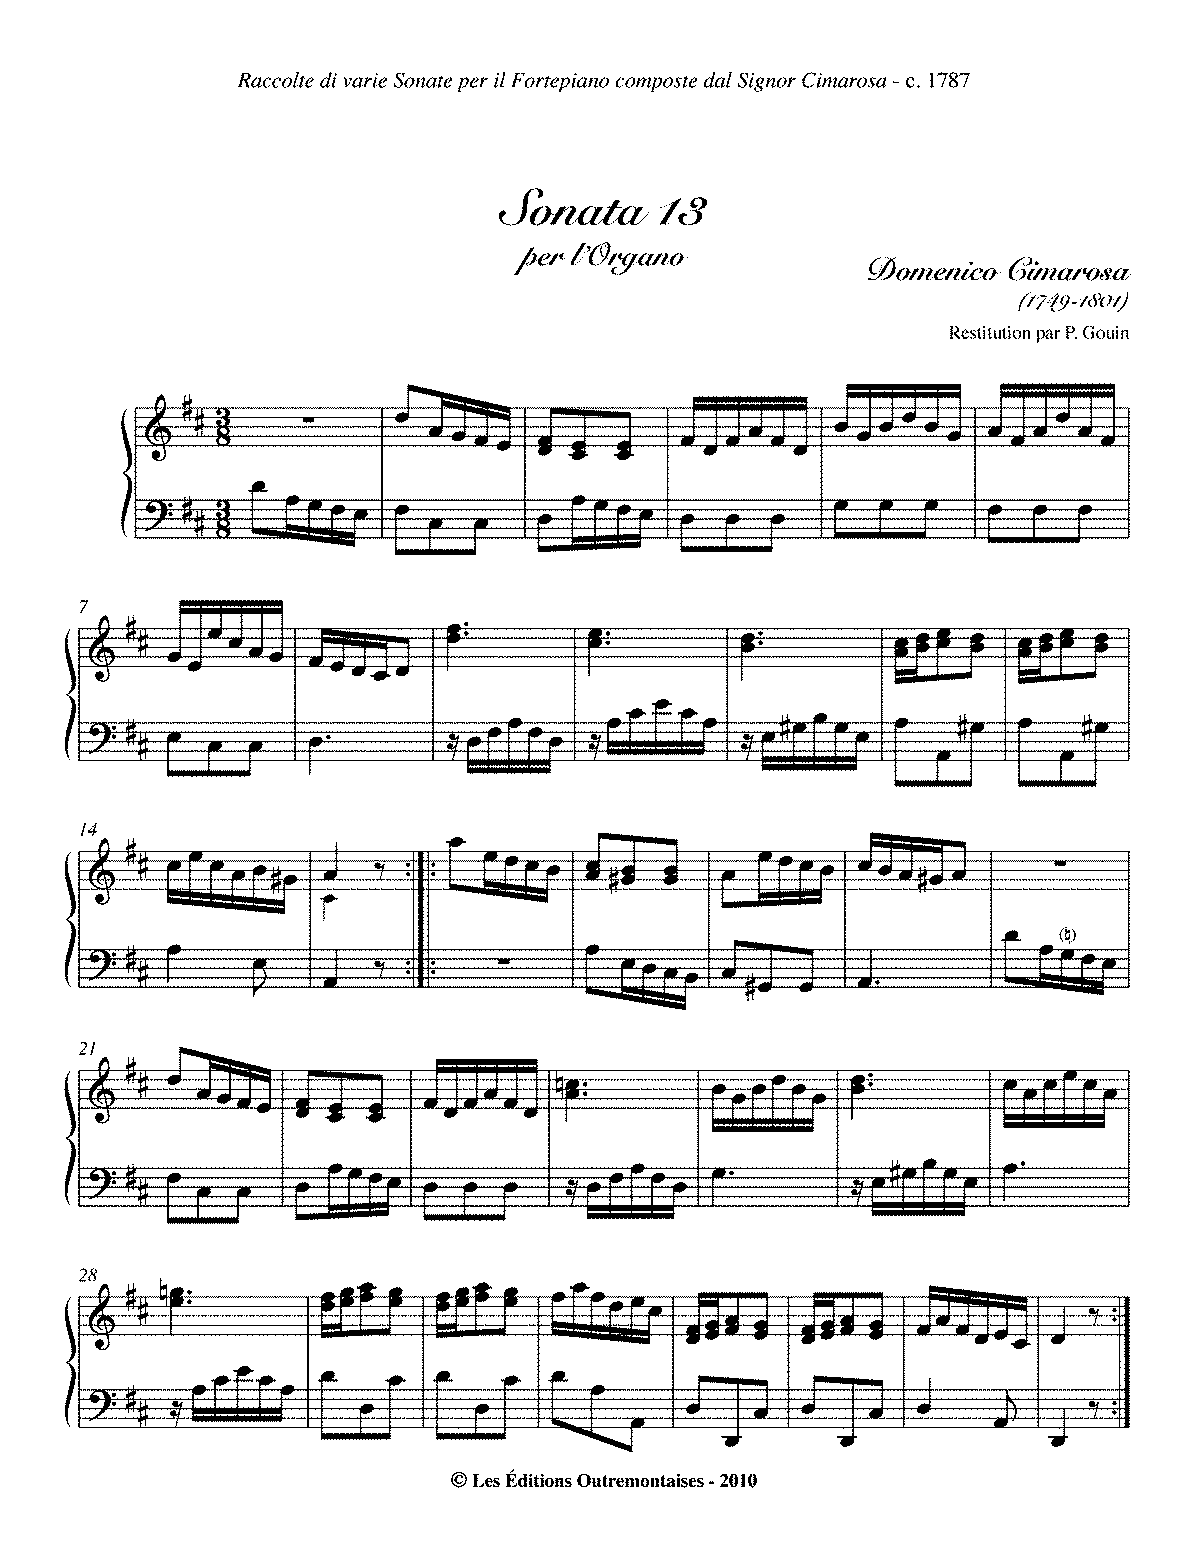 Organ Sonata in D major (Cimarosa, Domenico) - IMSLP